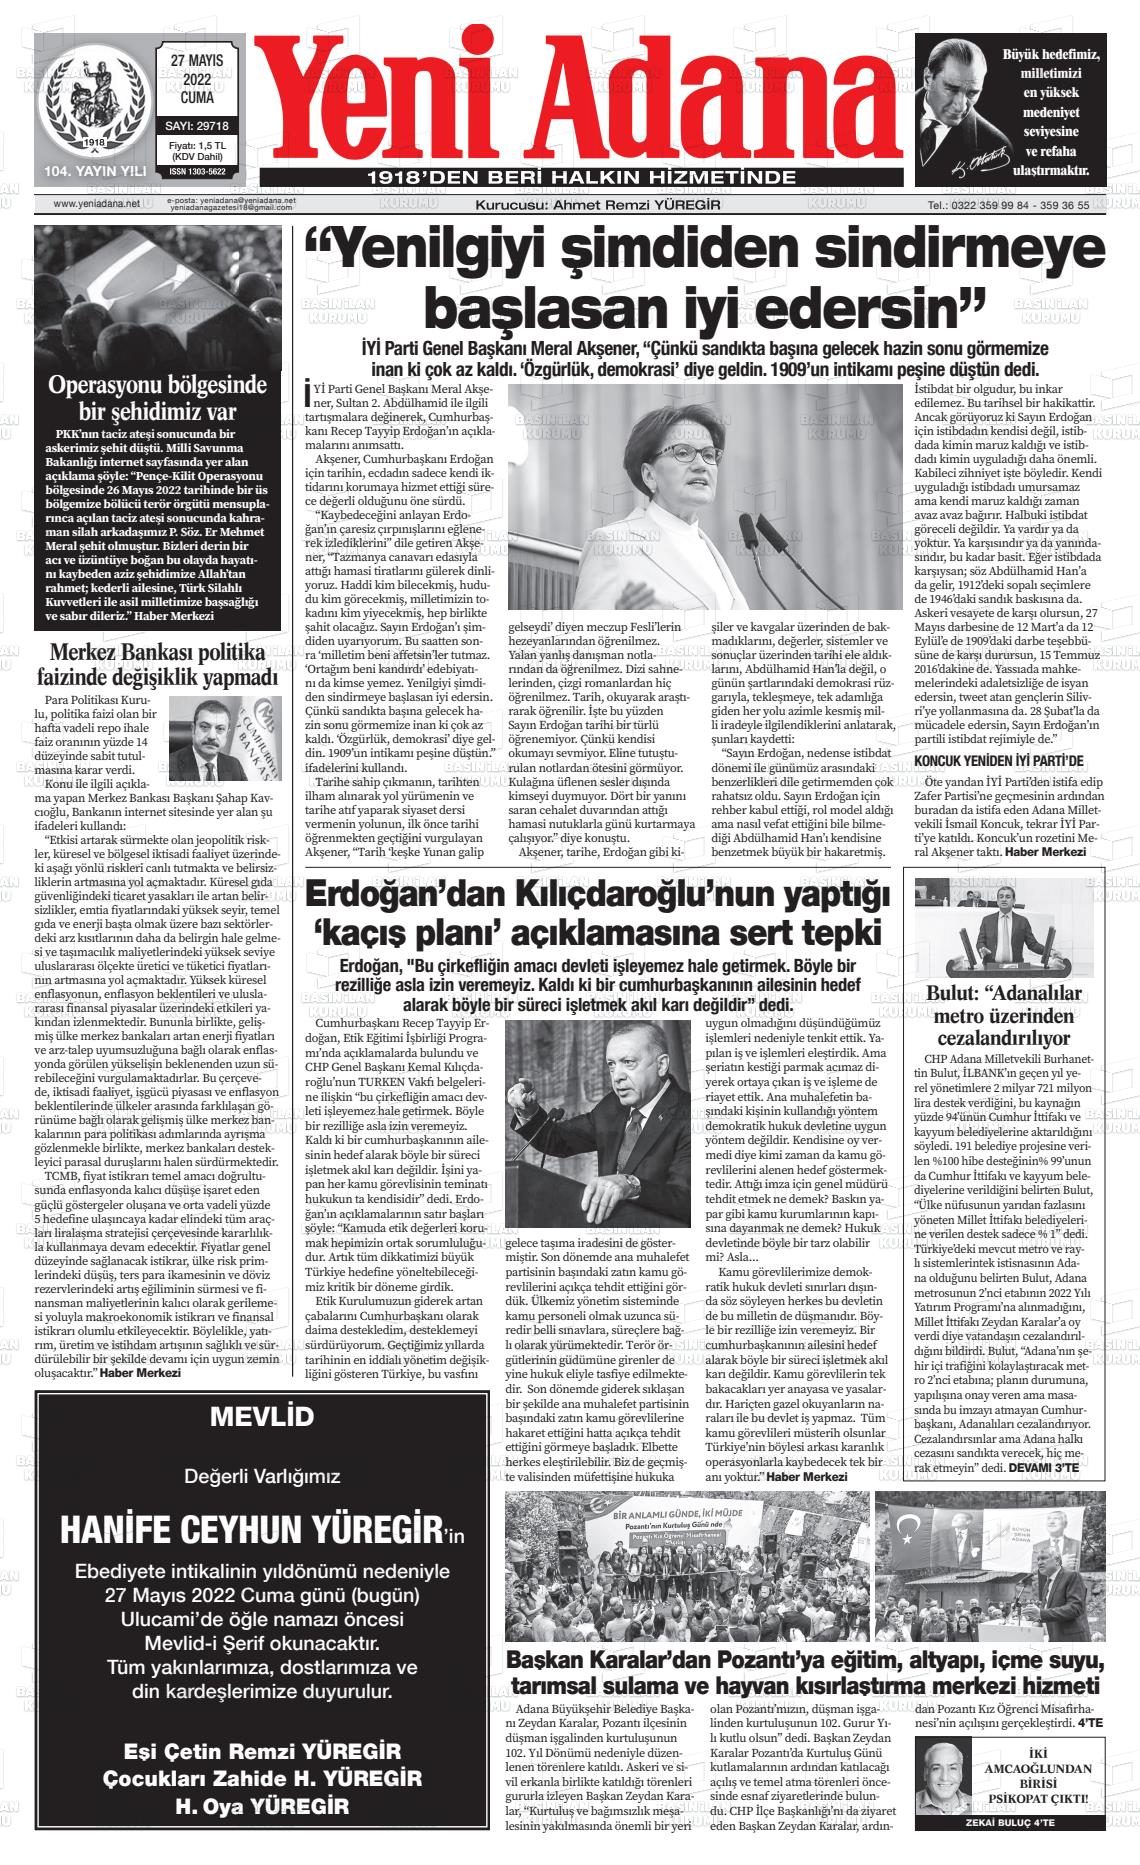 27 Mayıs 2022 Yeni Adana Gazete Manşeti